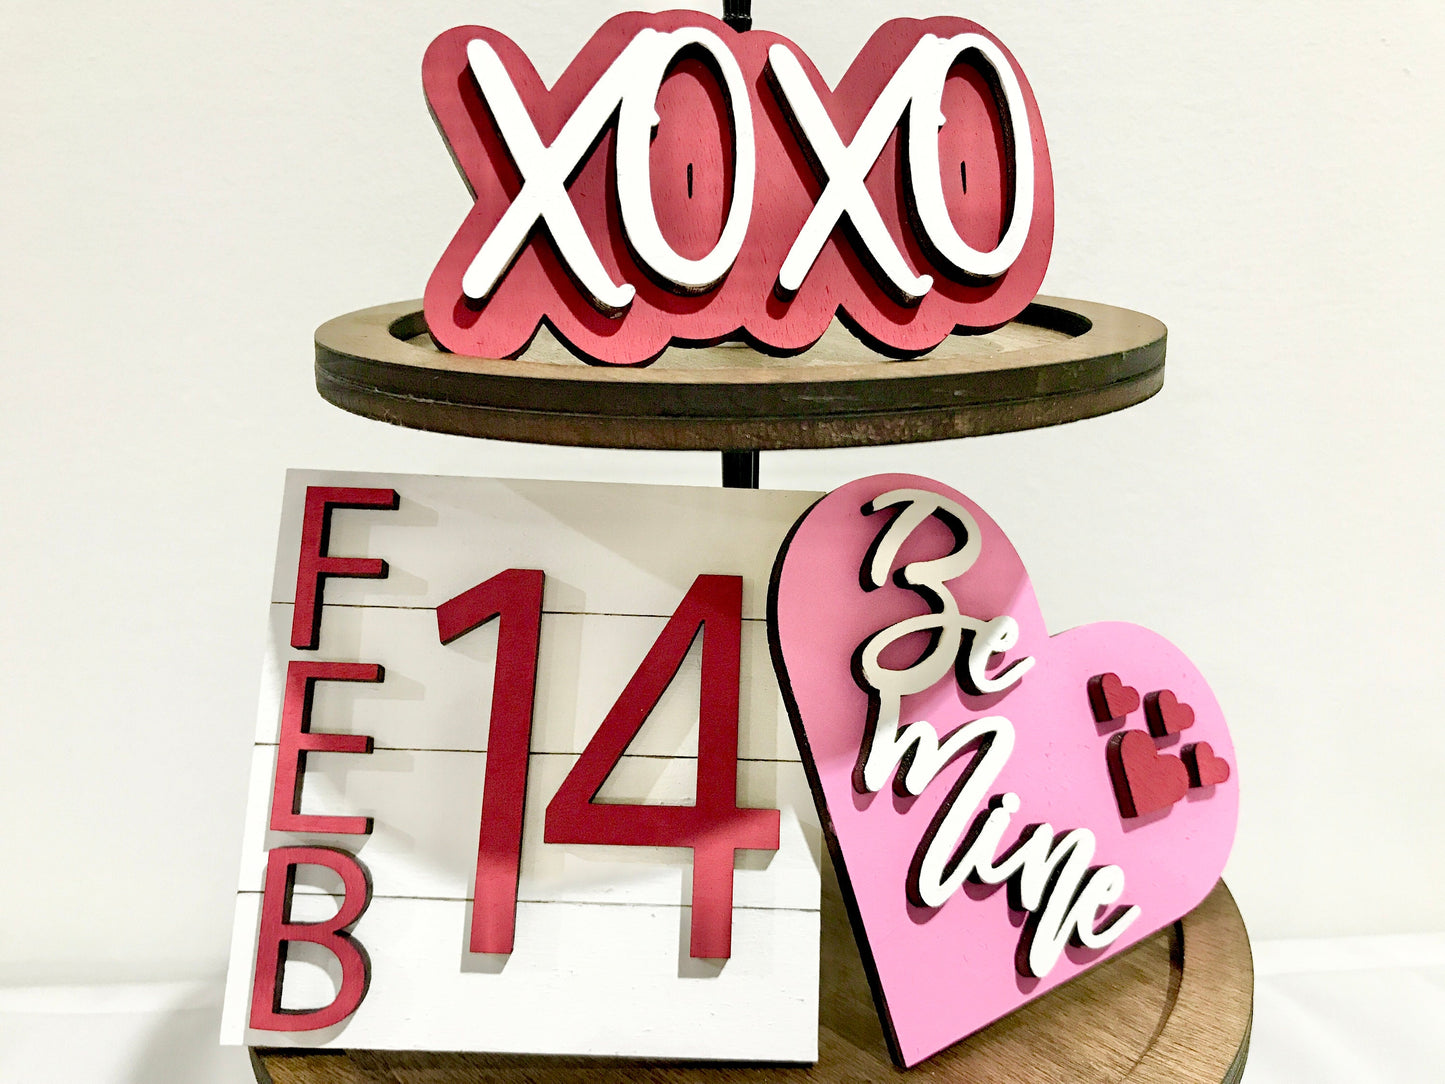 xoxo mini sign - feb 14 shiplap sign - be mine heart sign - tiered tray mini signs DIY